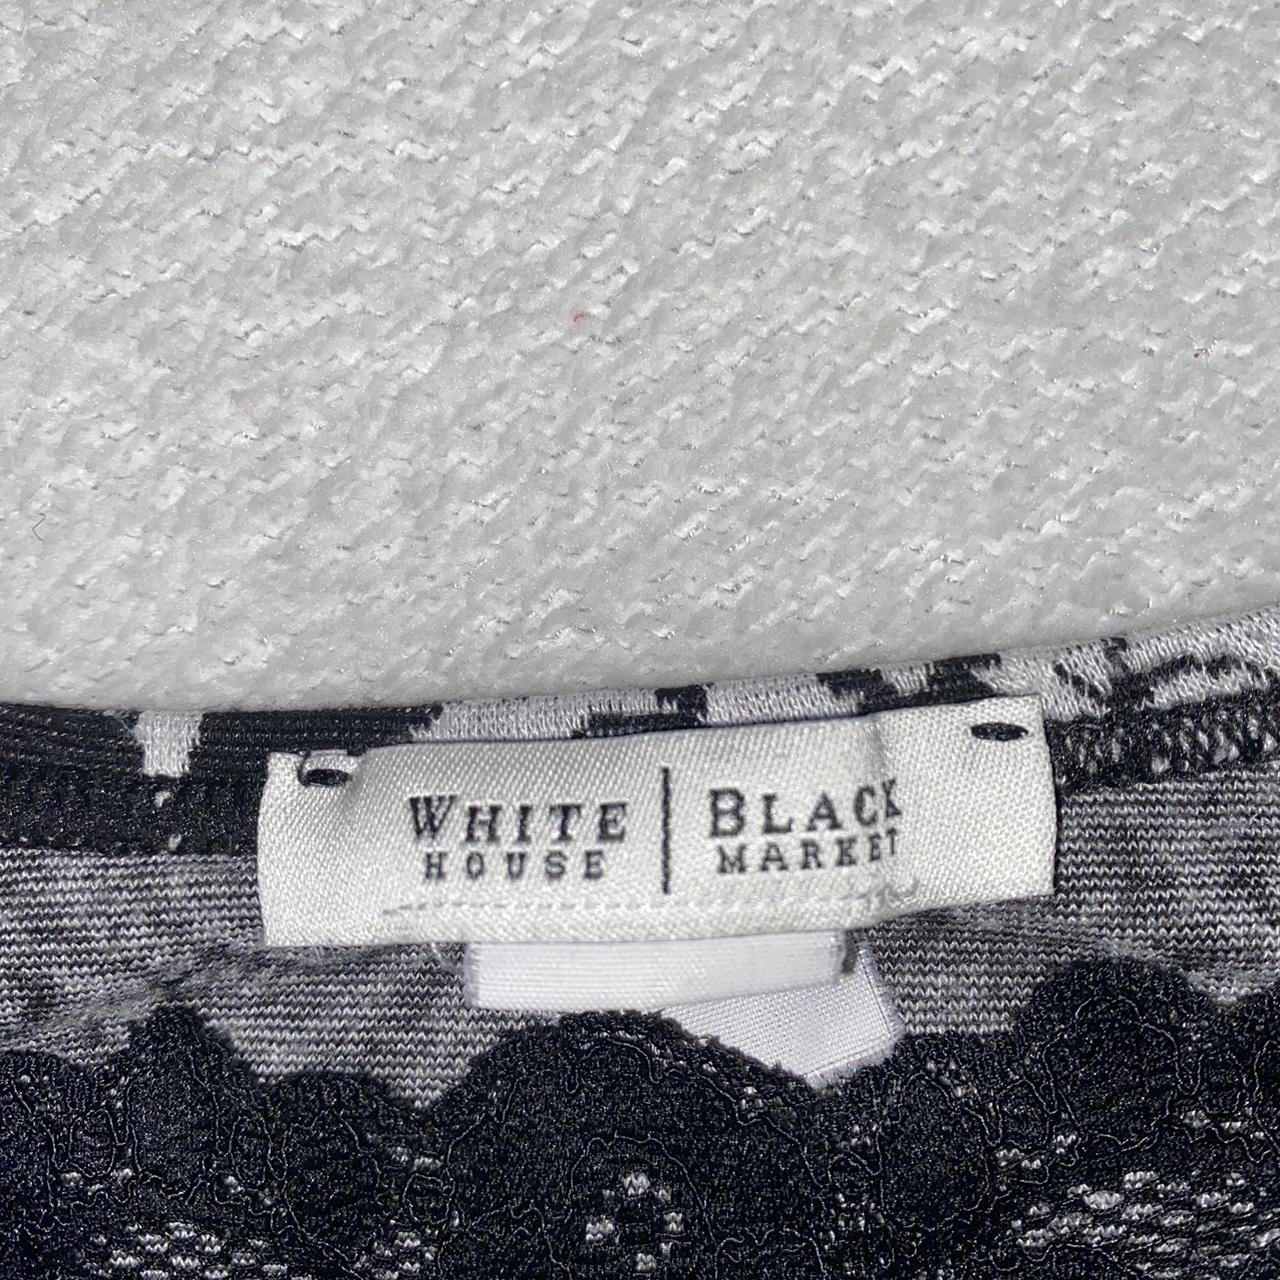 White House Black Market embroidered floral tank top - Depop